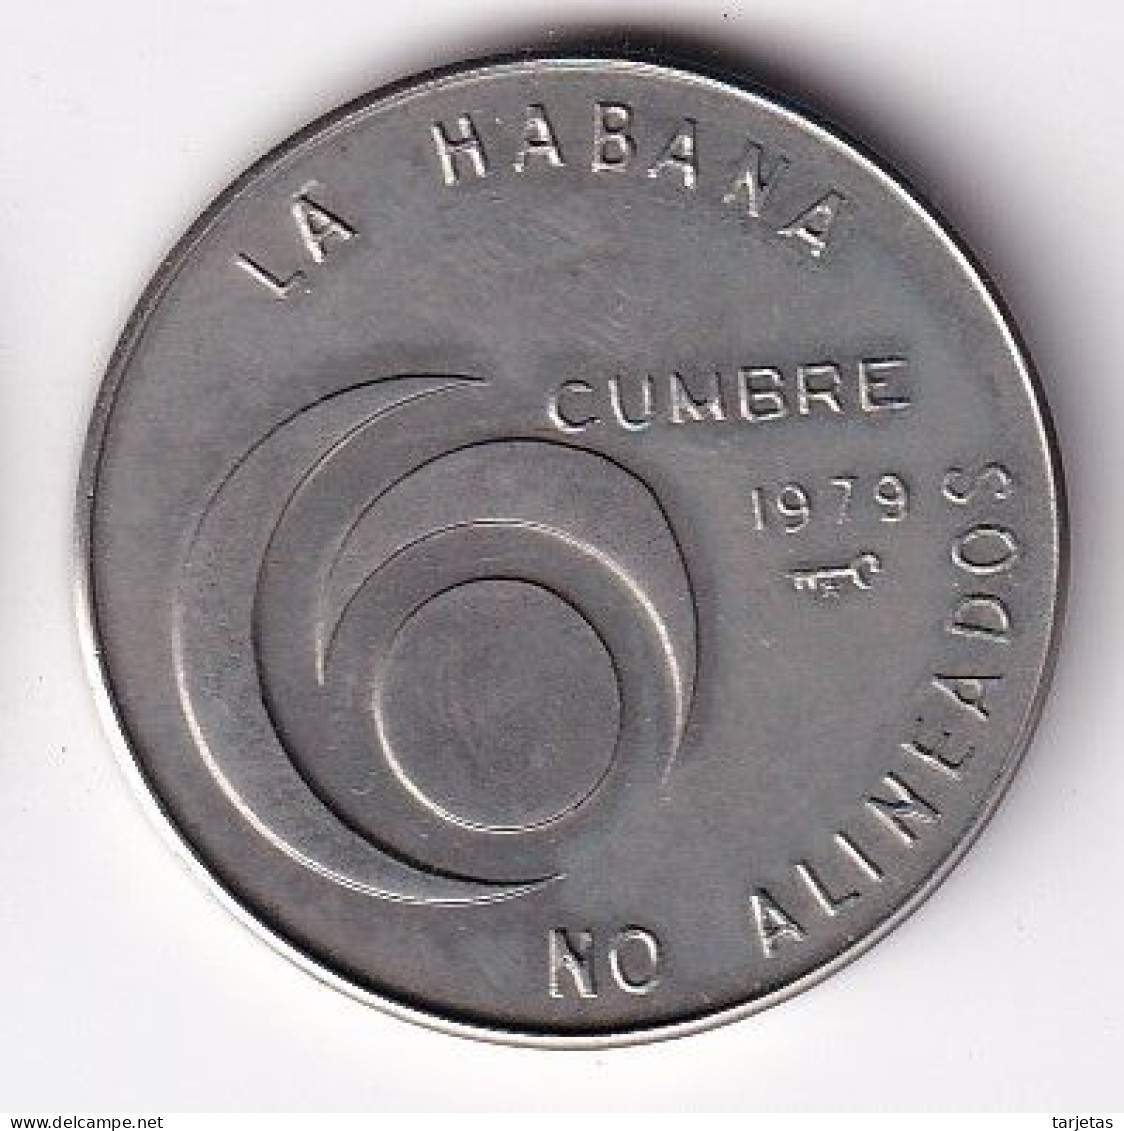 MONEDA DE CUBA DE 1 PESO DEL AÑO 1979 CUMBRE DE LA HABANA (COIN)  (NUEVA - UNC) - Cuba